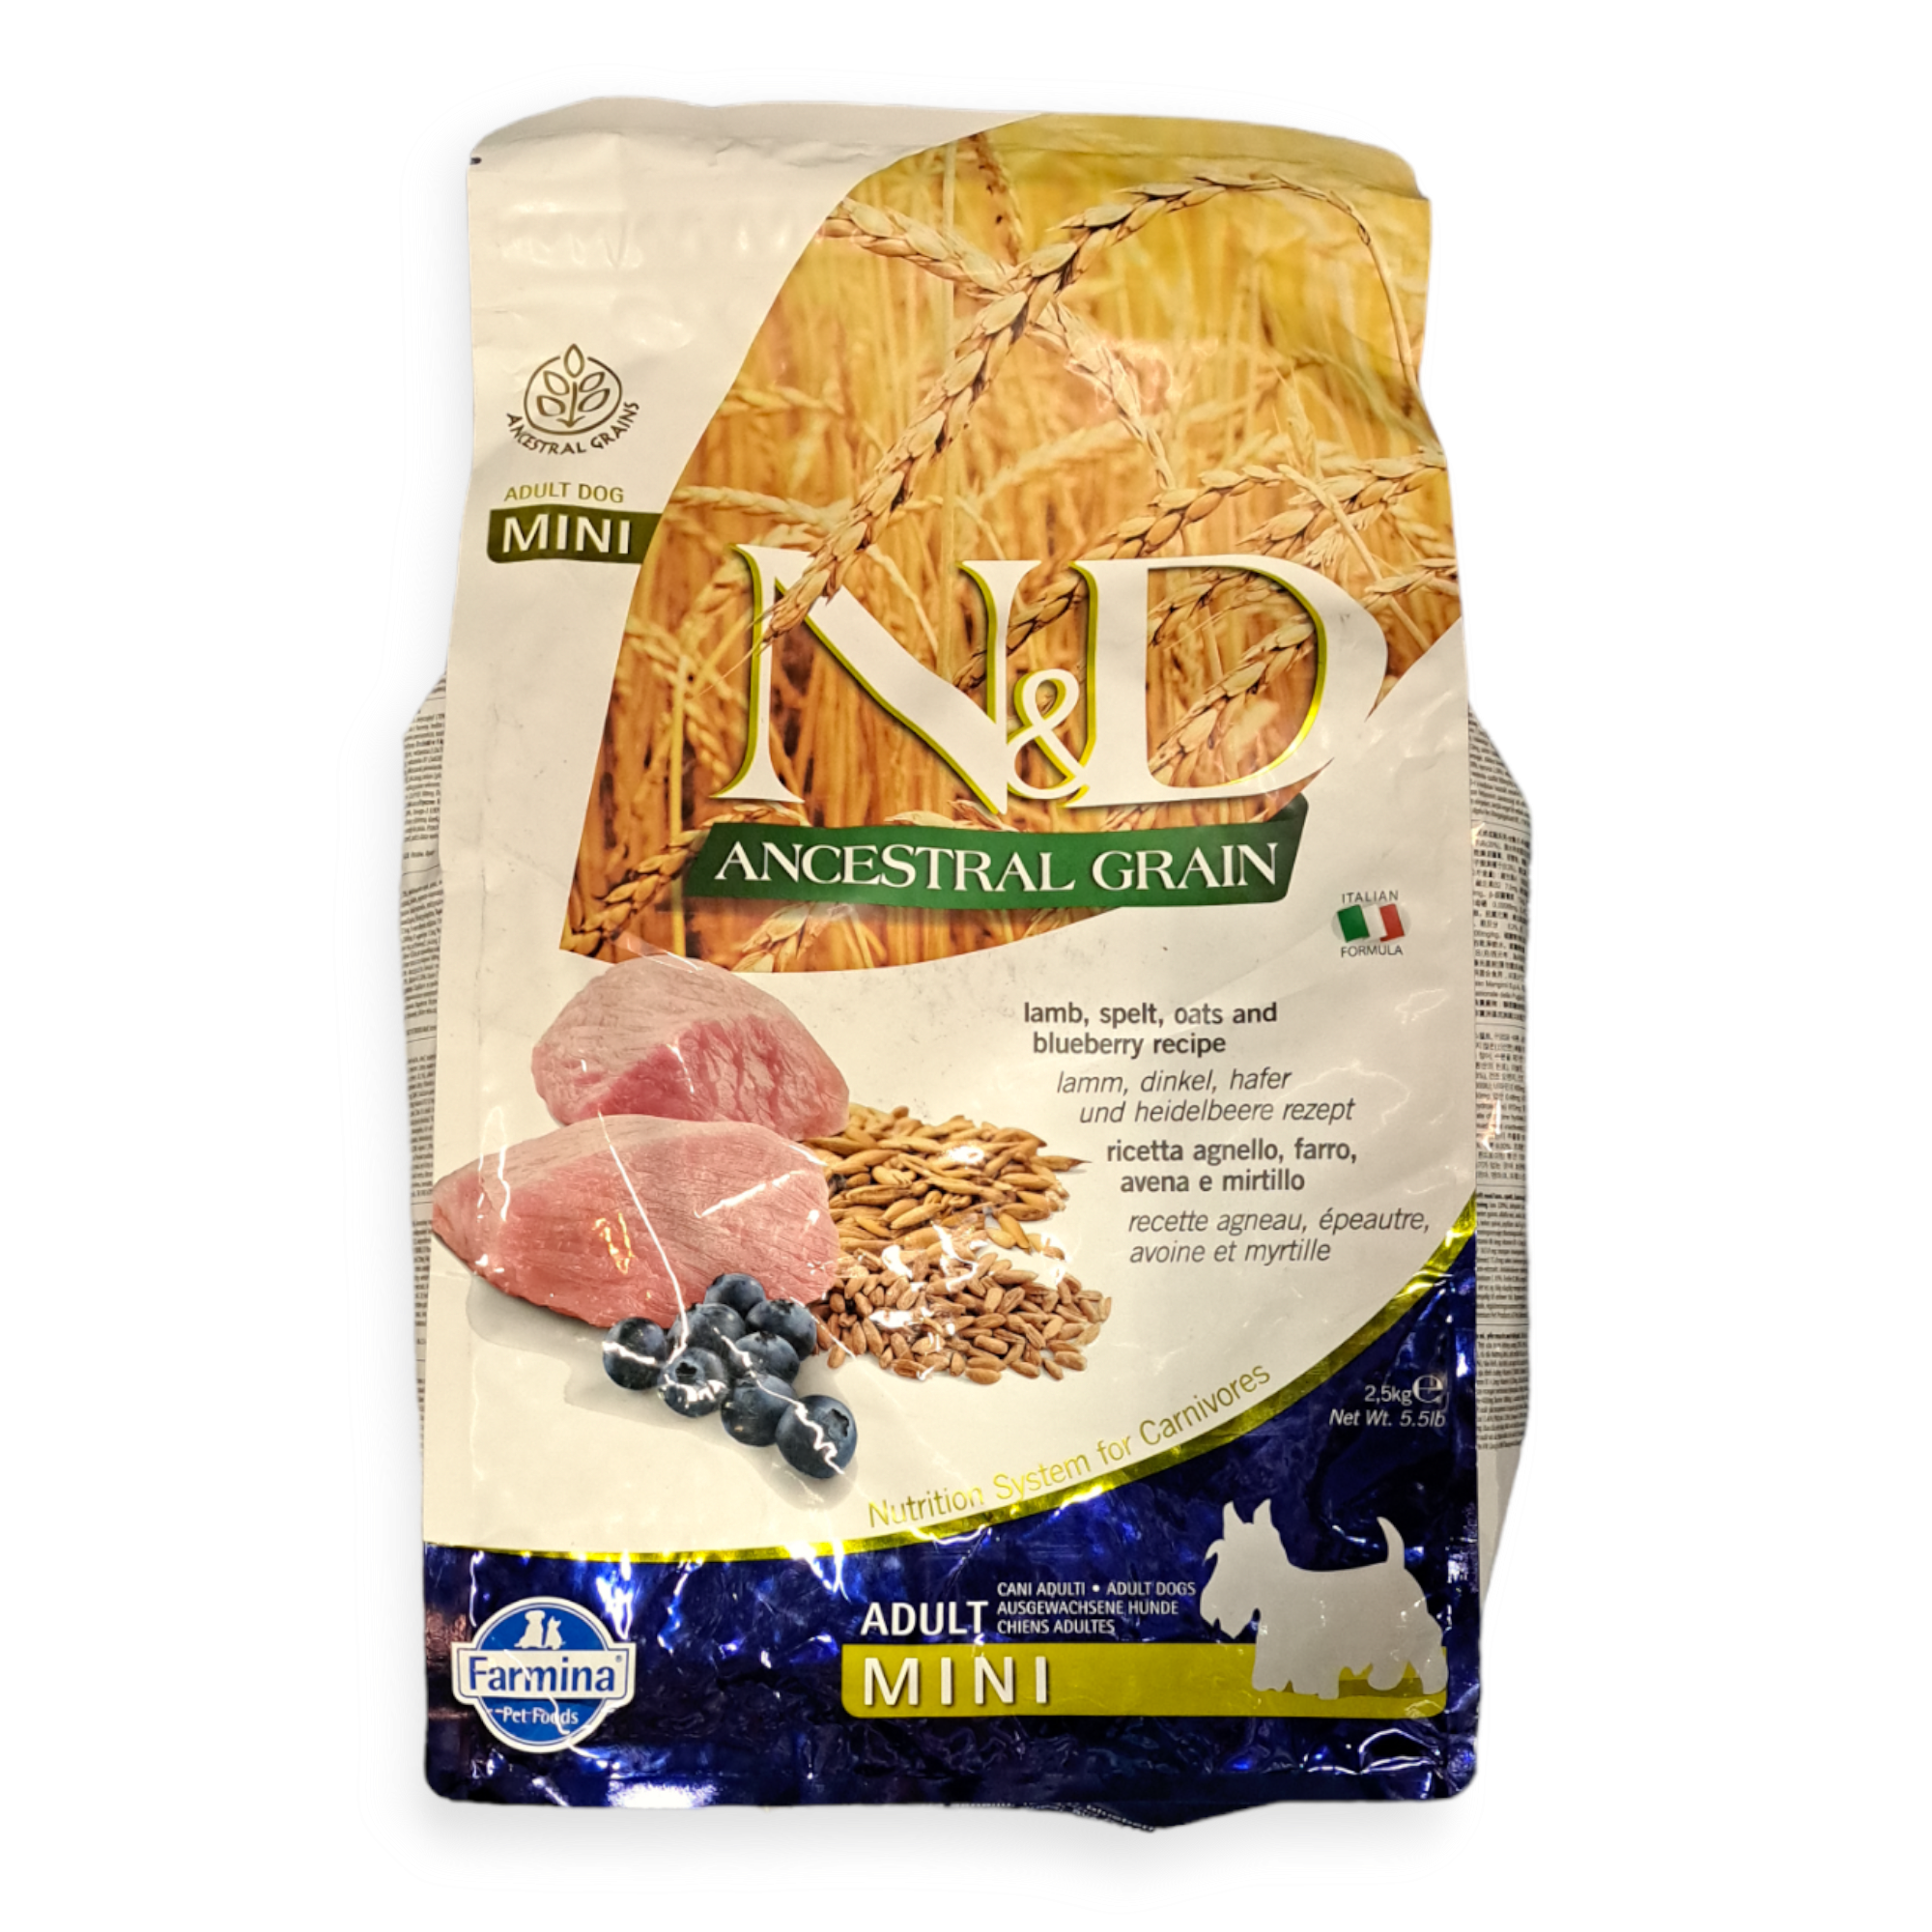 N&D Ancestral Grain טבעי וטעים כבש ואוכמניות מיני לכלב בוגר, 2.5 ק”ג לחתולים